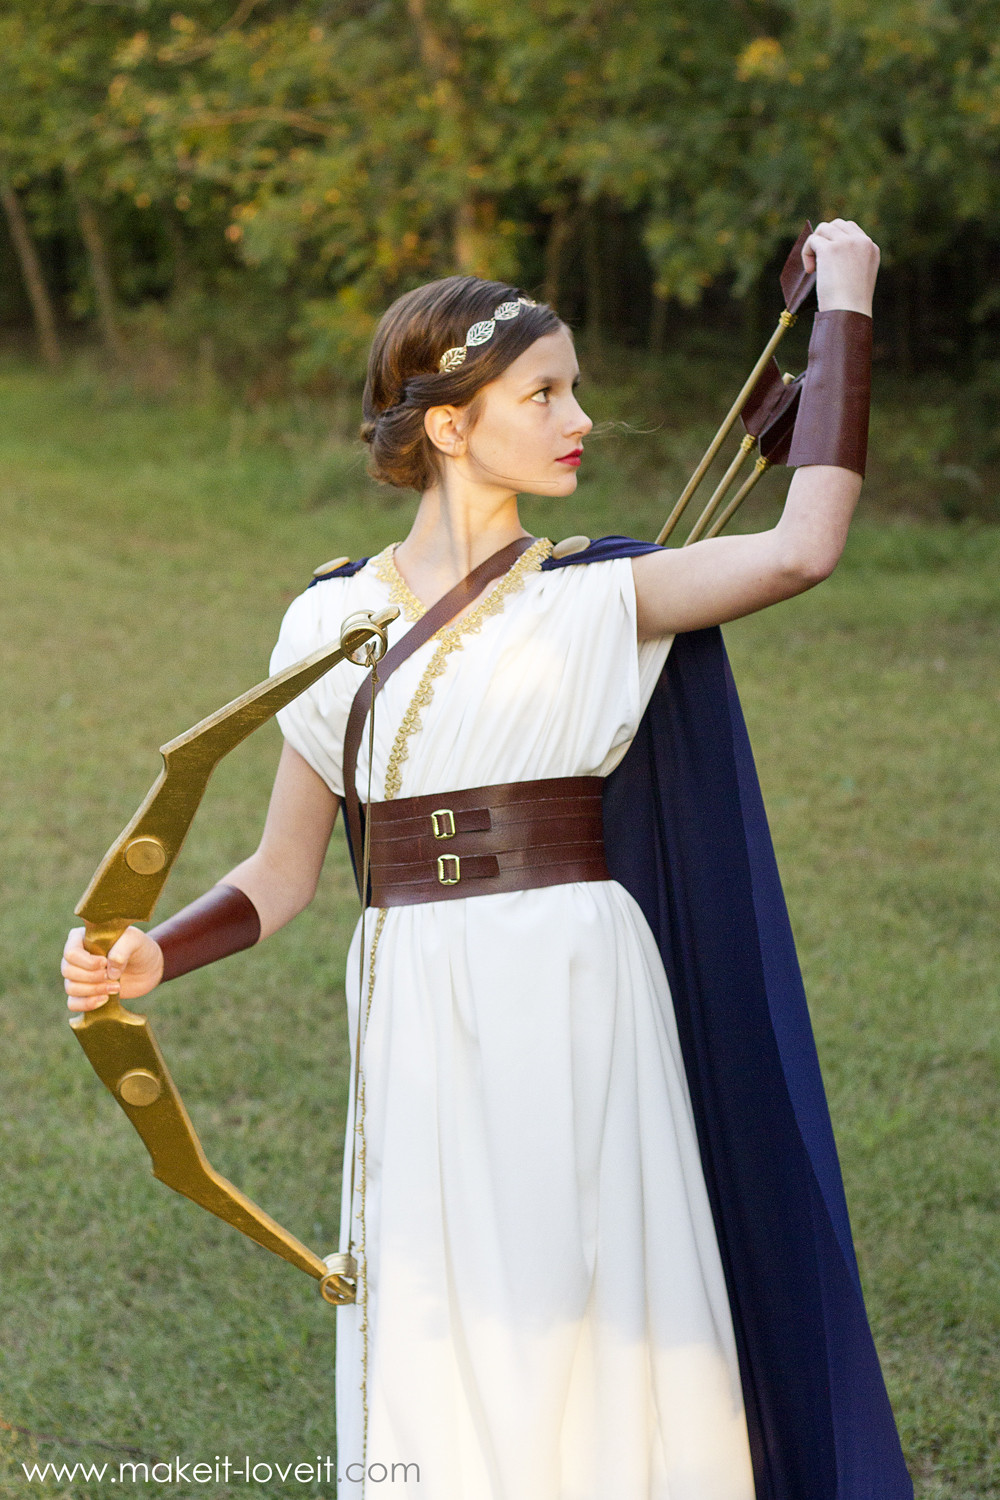 Best ideas about Greek God Costume DIY
. Save or Pin DIY Greek Goddess Costume ARTEMIS Now.